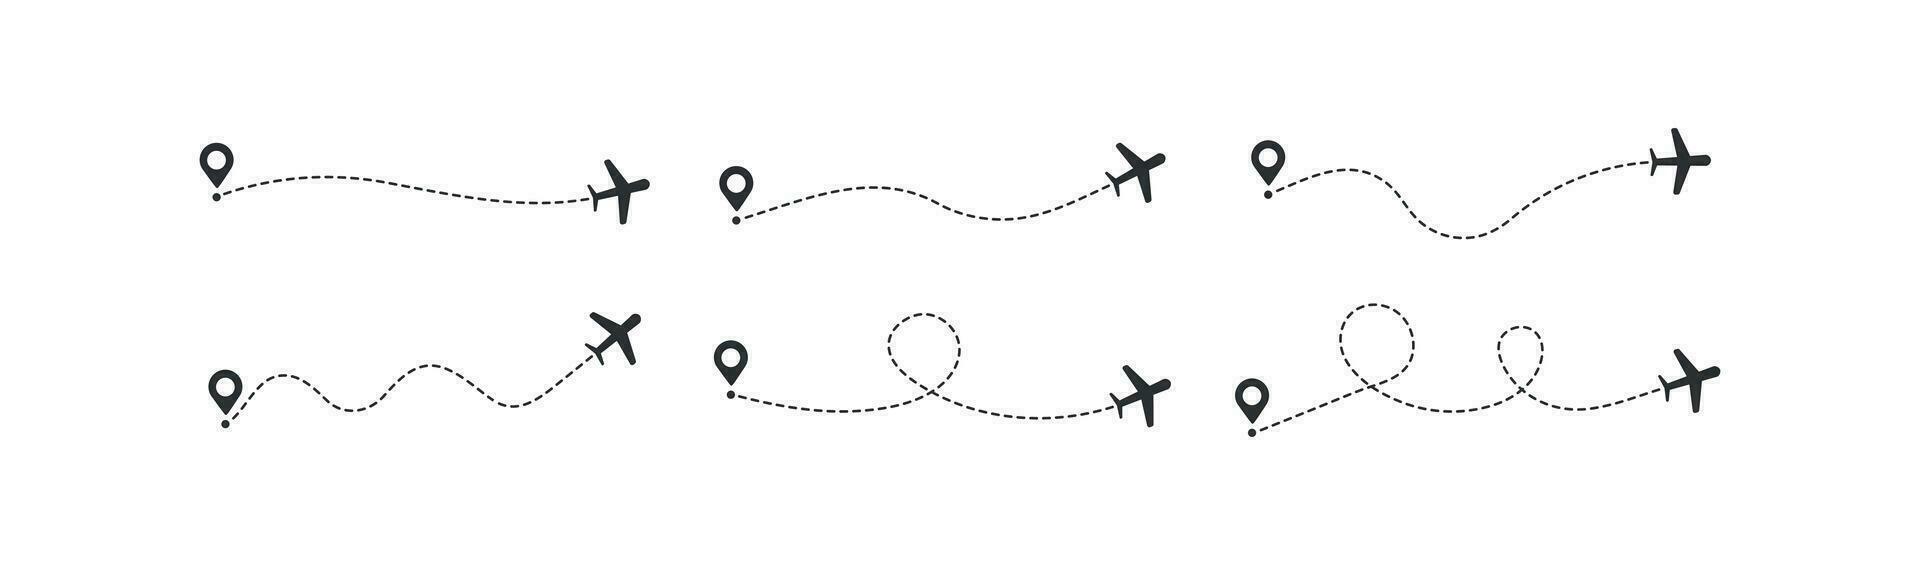 Plane route icon set. Airplane path vector